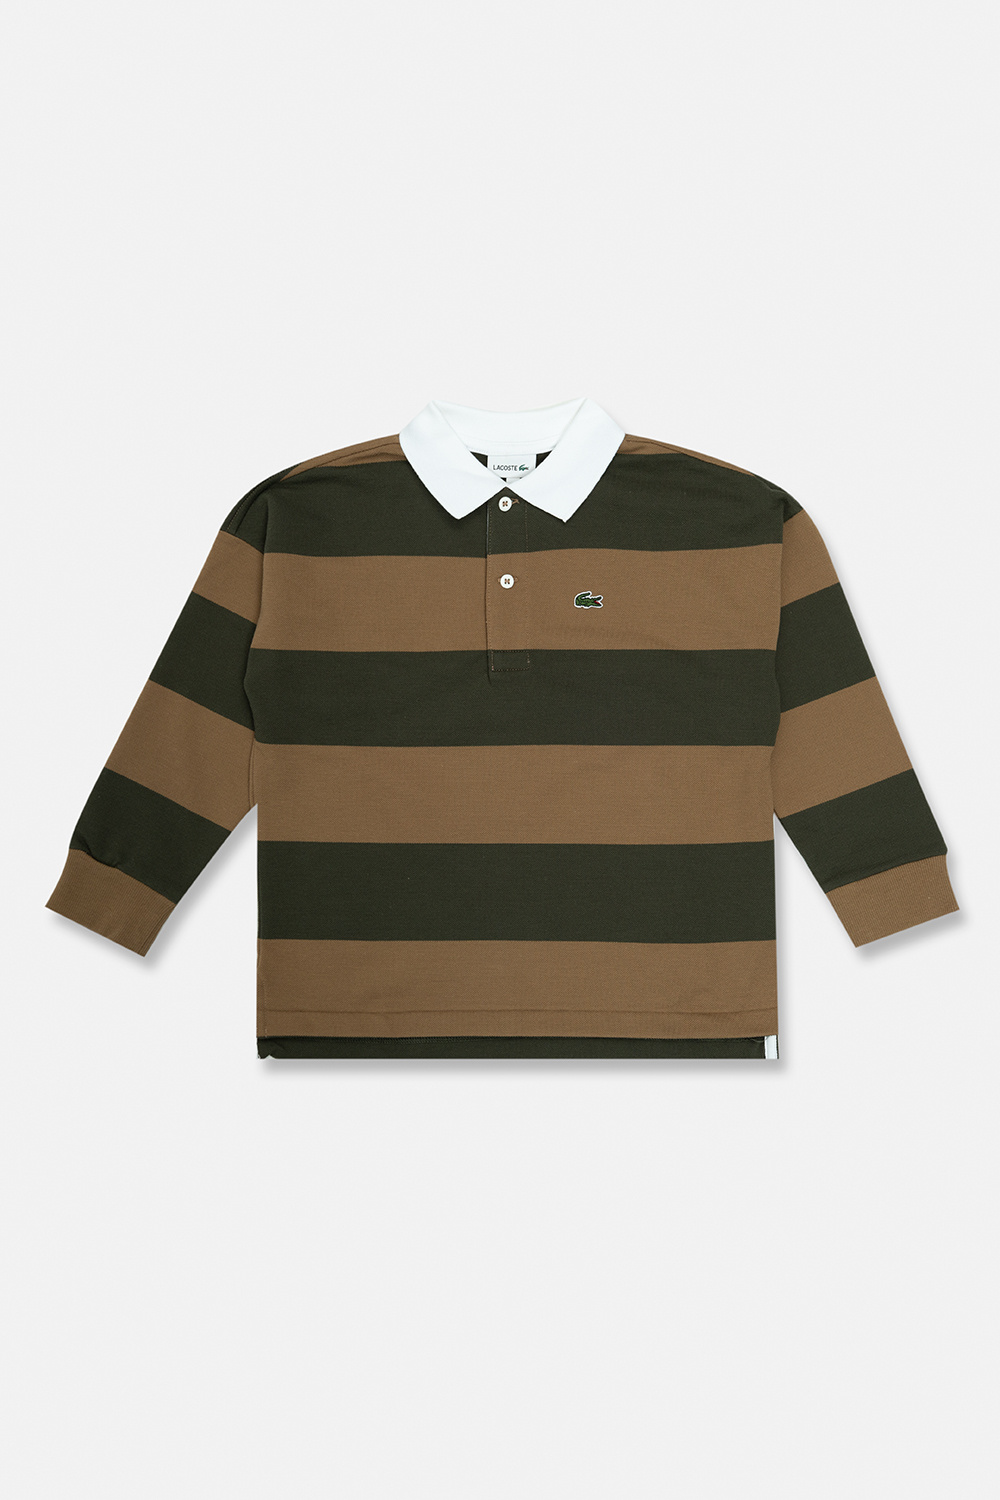 Lacoste Kids Polo Ralph Lauren Blue Cotton Blend Sweater With item